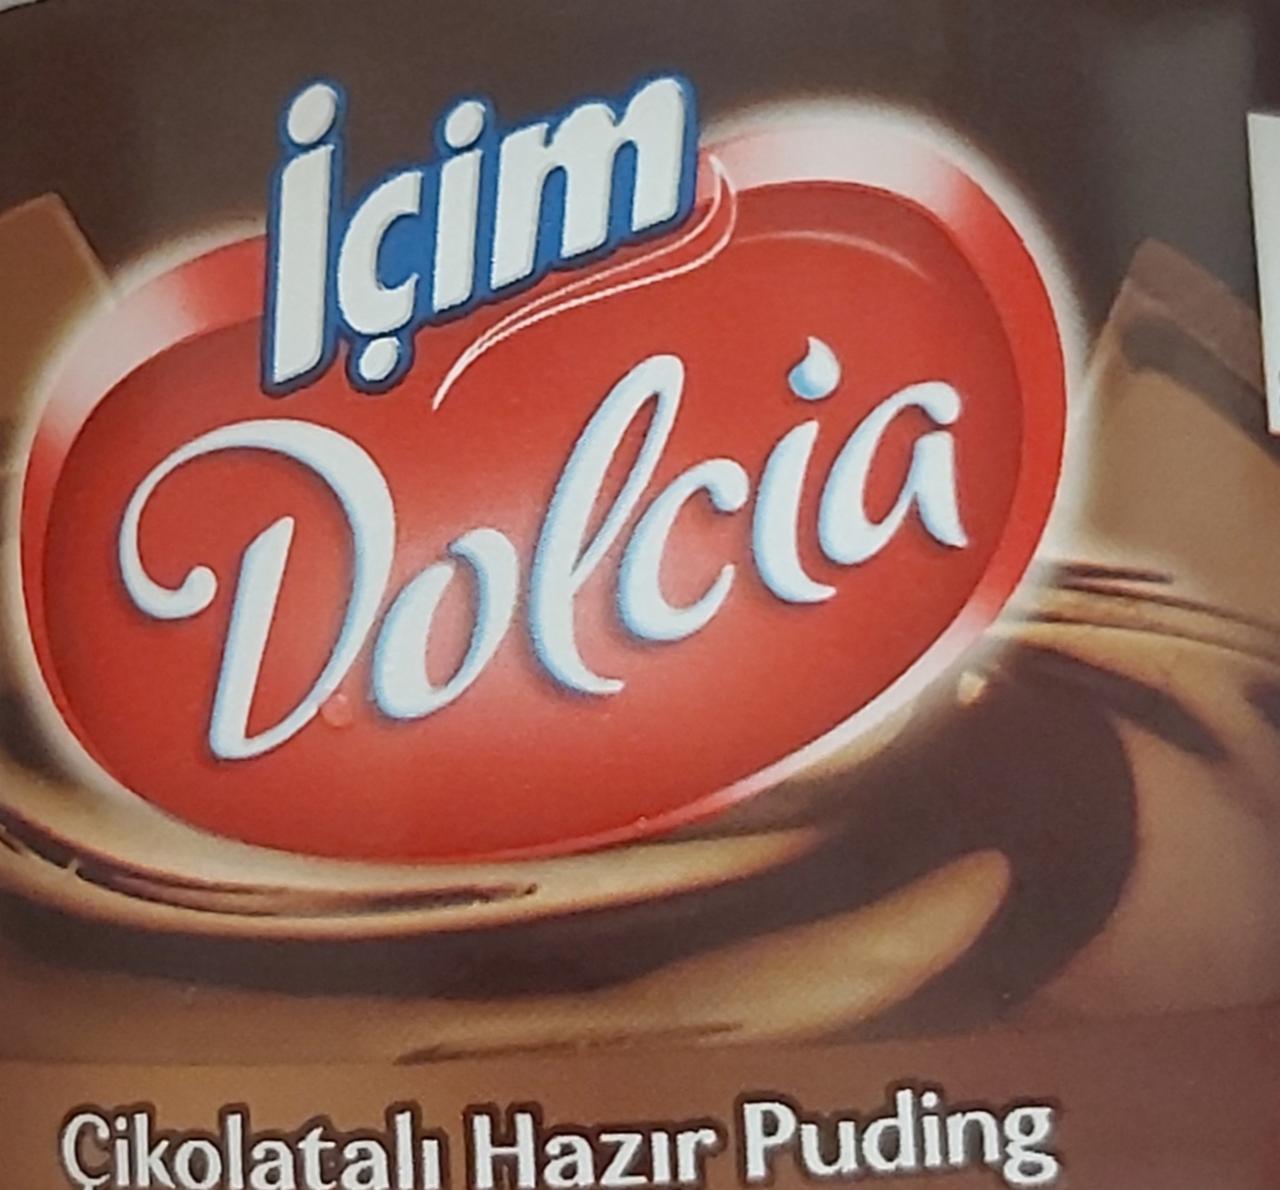 Фото - Шоколадный пудинг Icim Dolcia